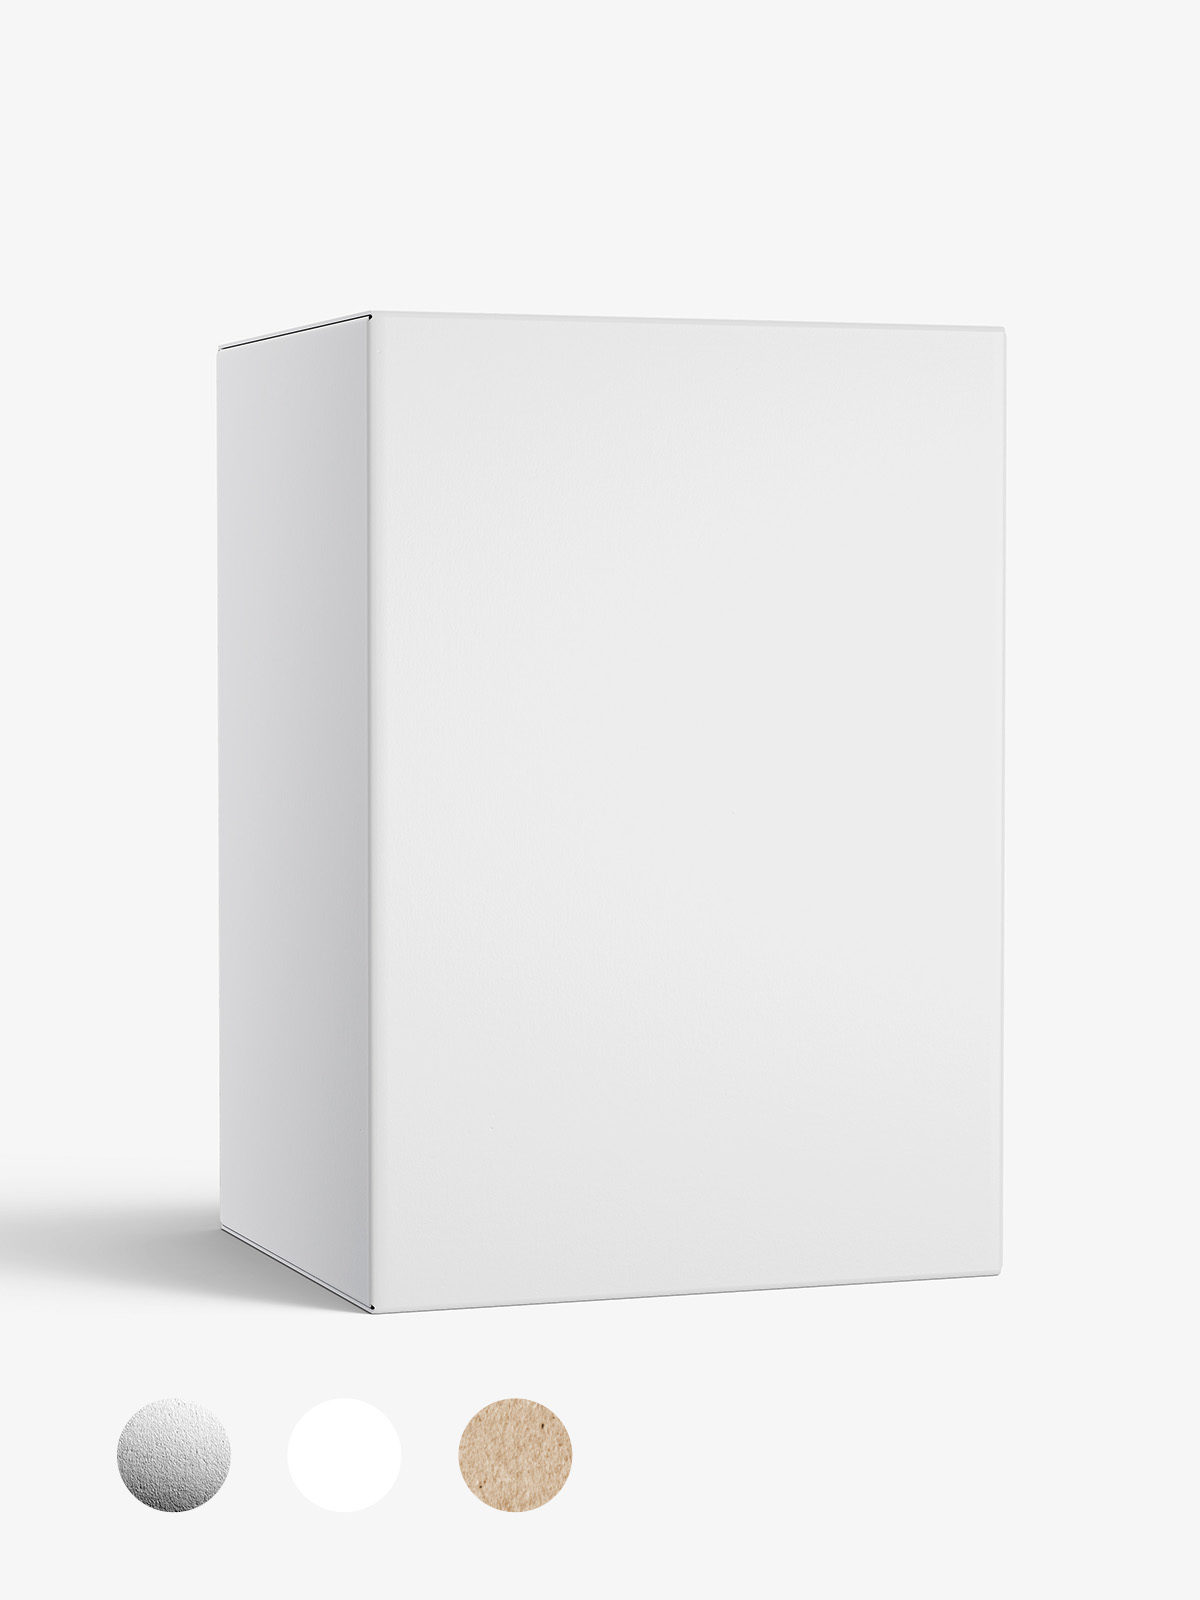 Download Box mockup / 70x100x60 mm / white - metallic - kraft ...